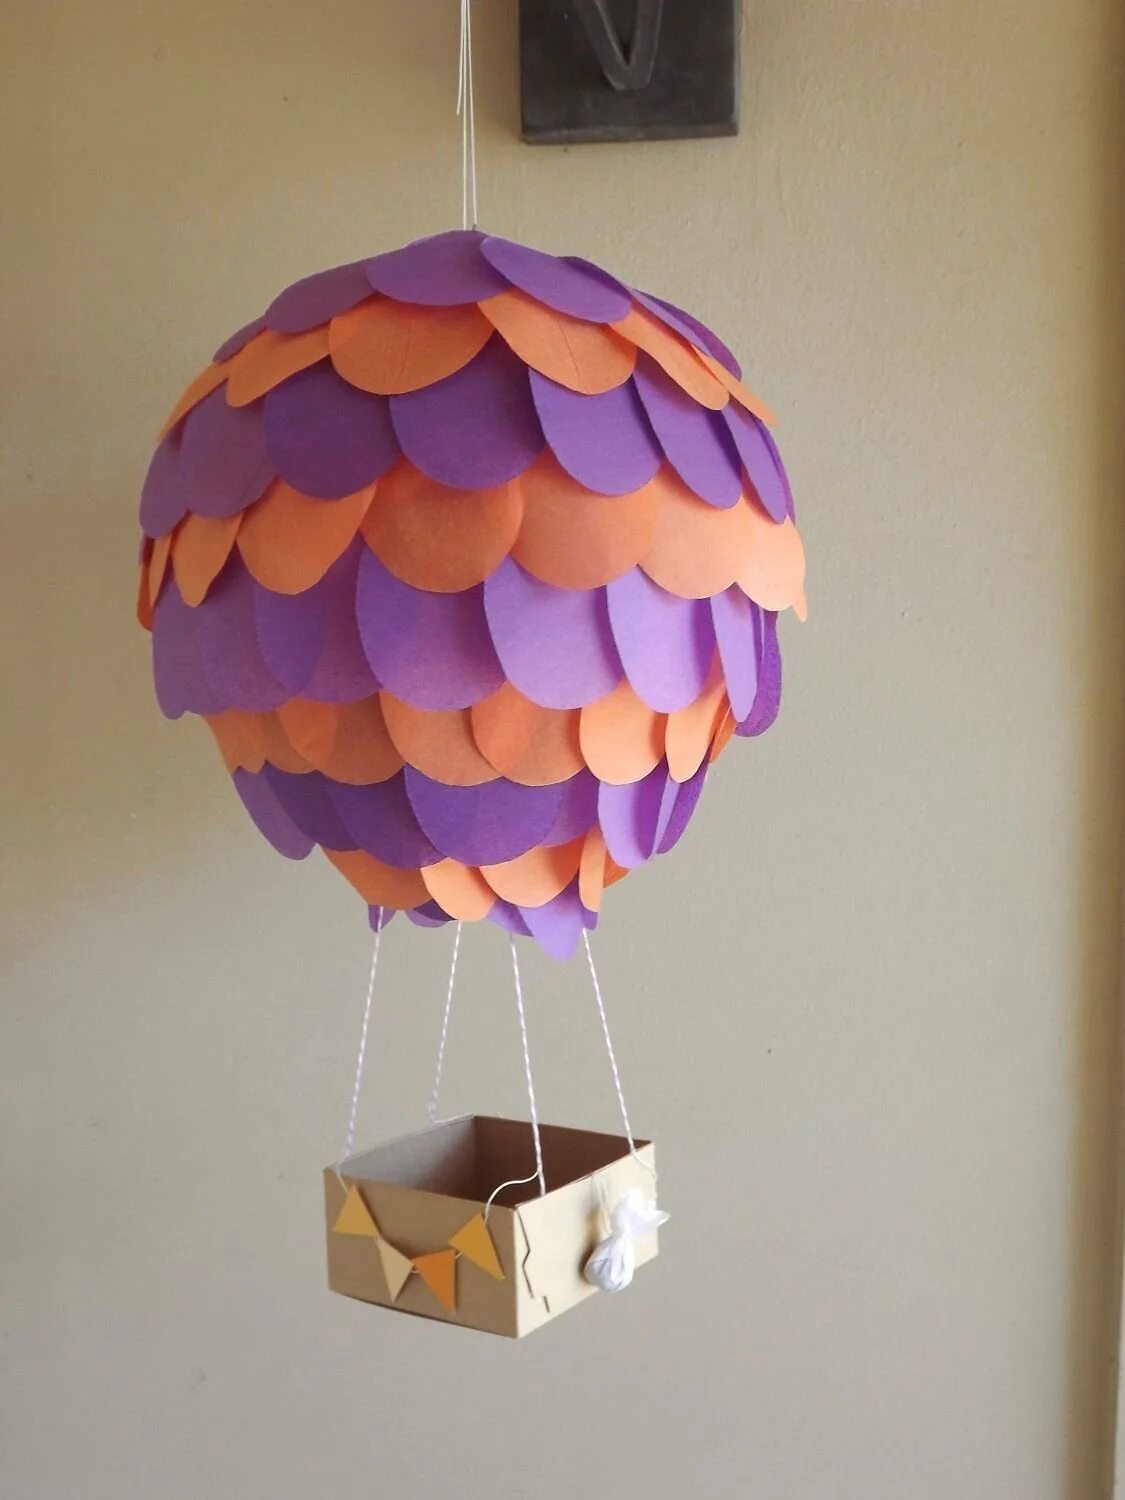 Мастер класс воздушный шар. Объемный воздушный шар. Воздушный шар поделка. Поделка воздушный шар из бумаги. Поделка воздушный шар с корзиной.